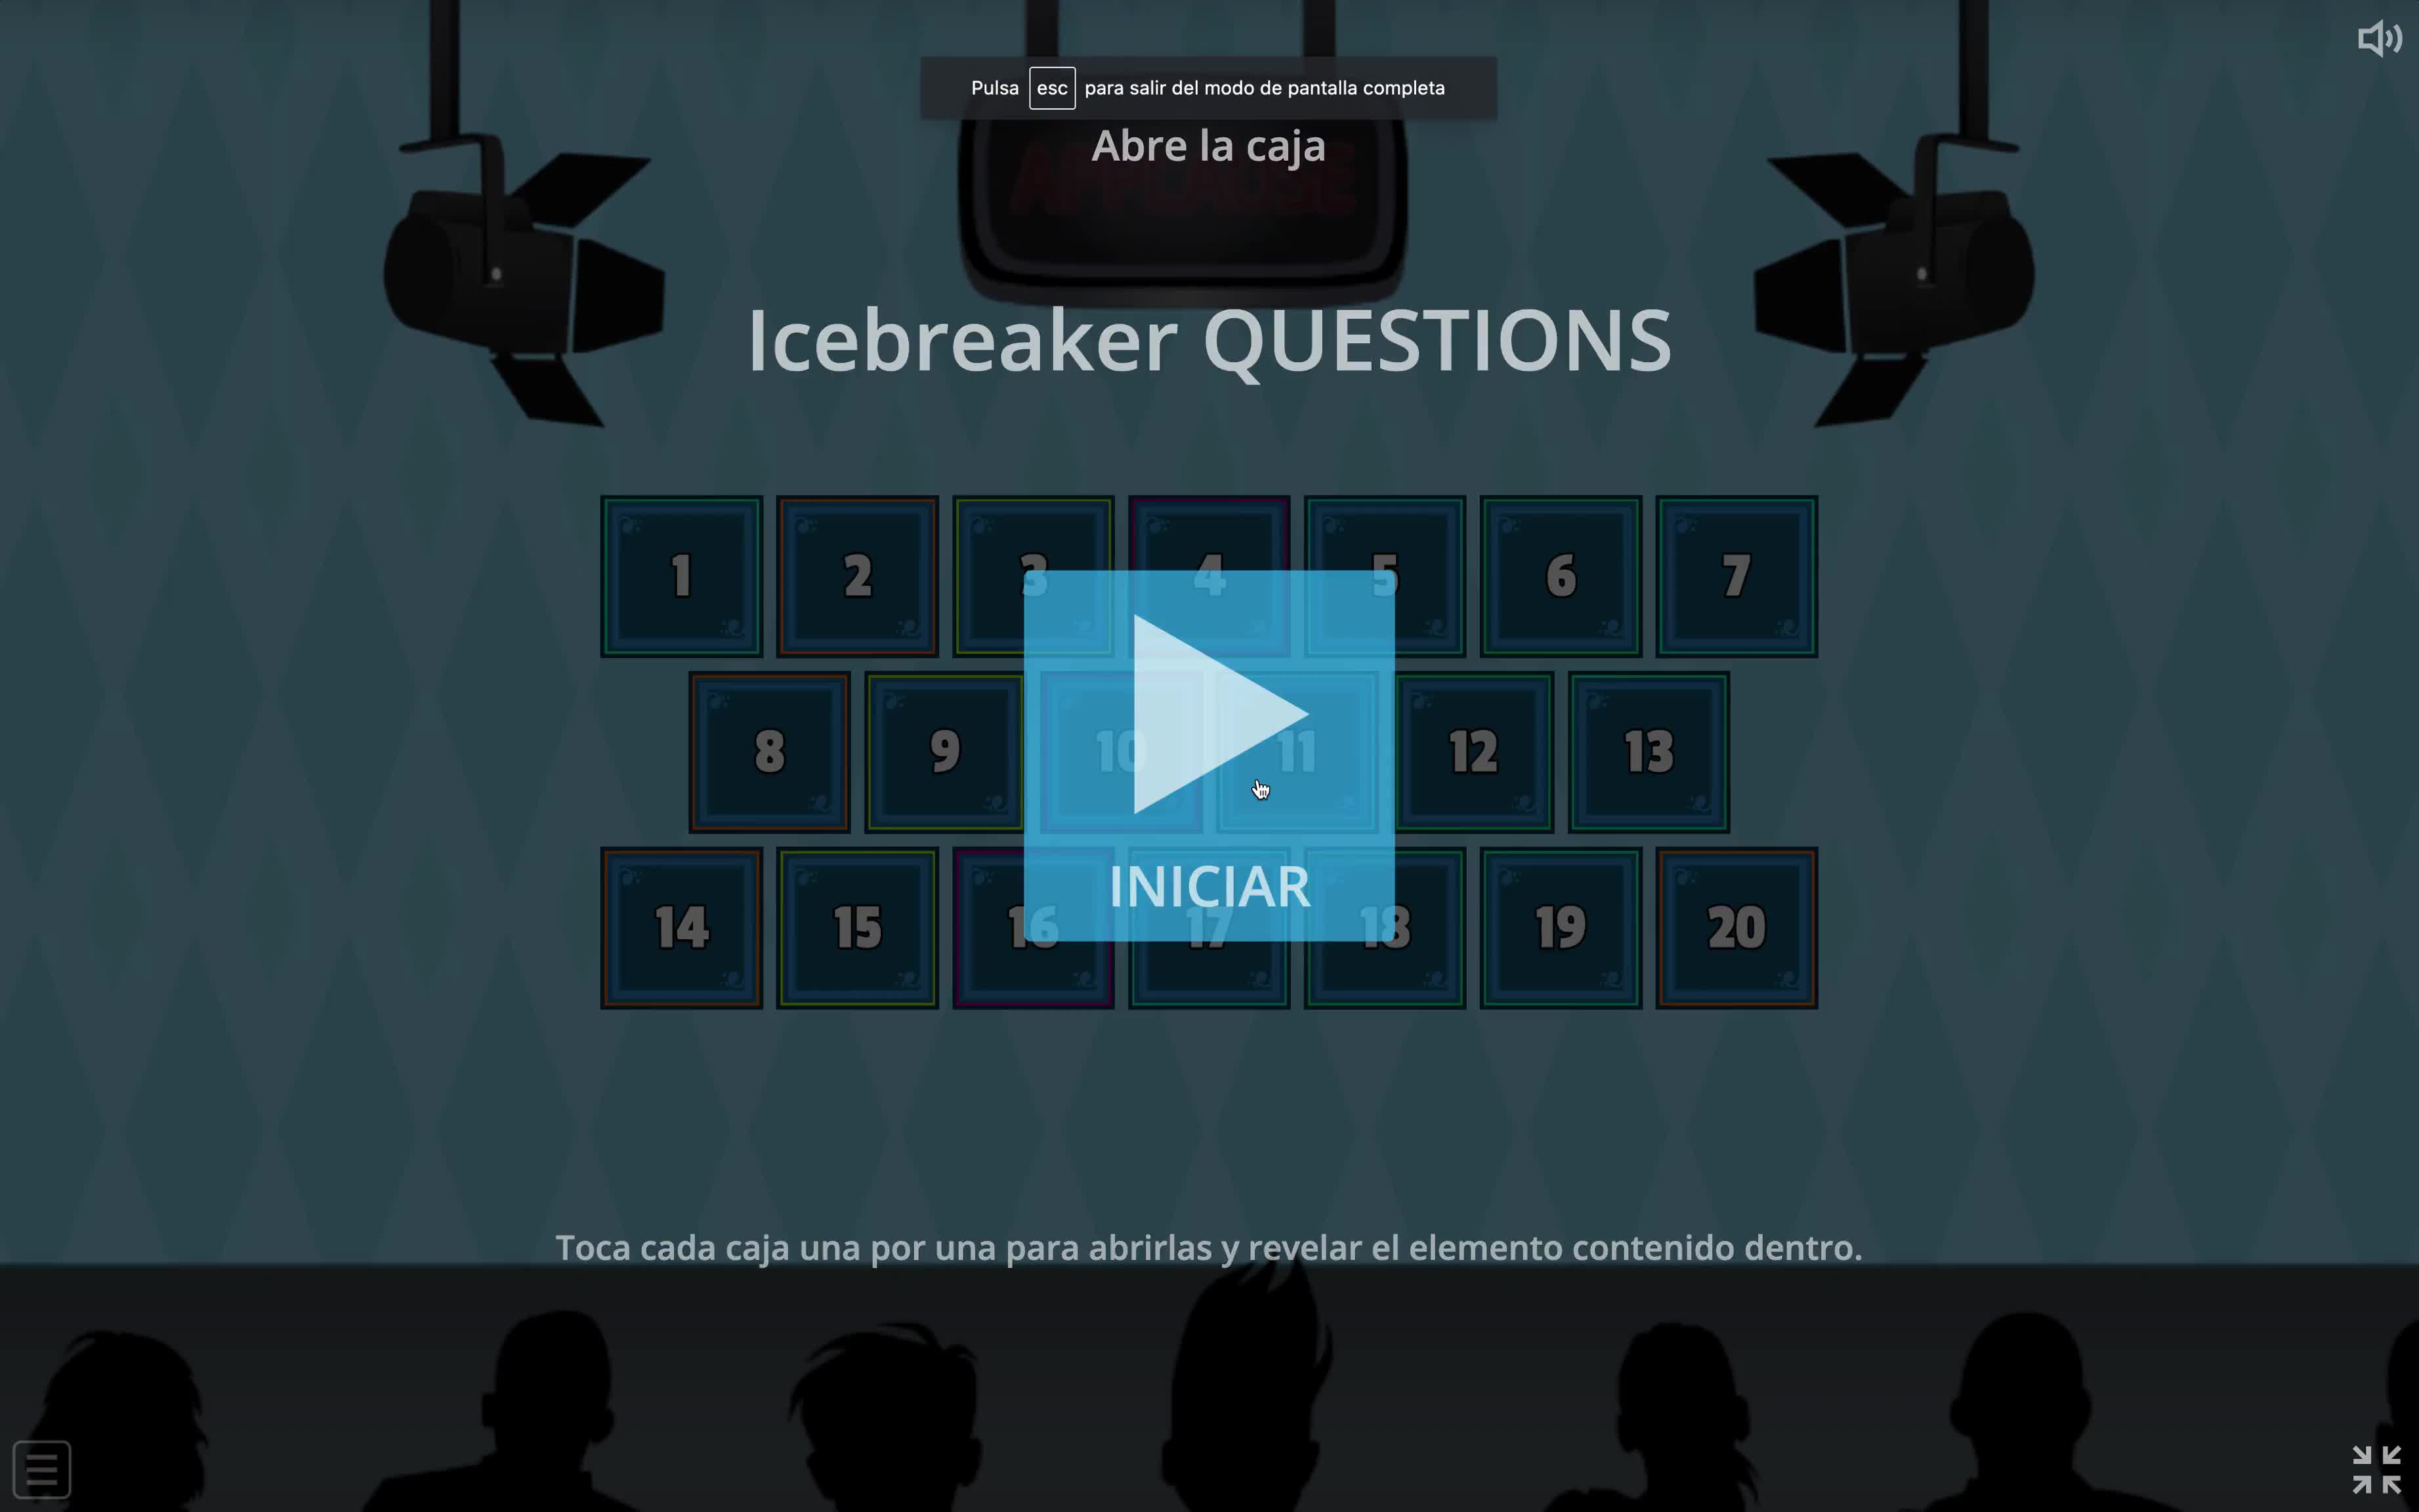 Icebreaker questions